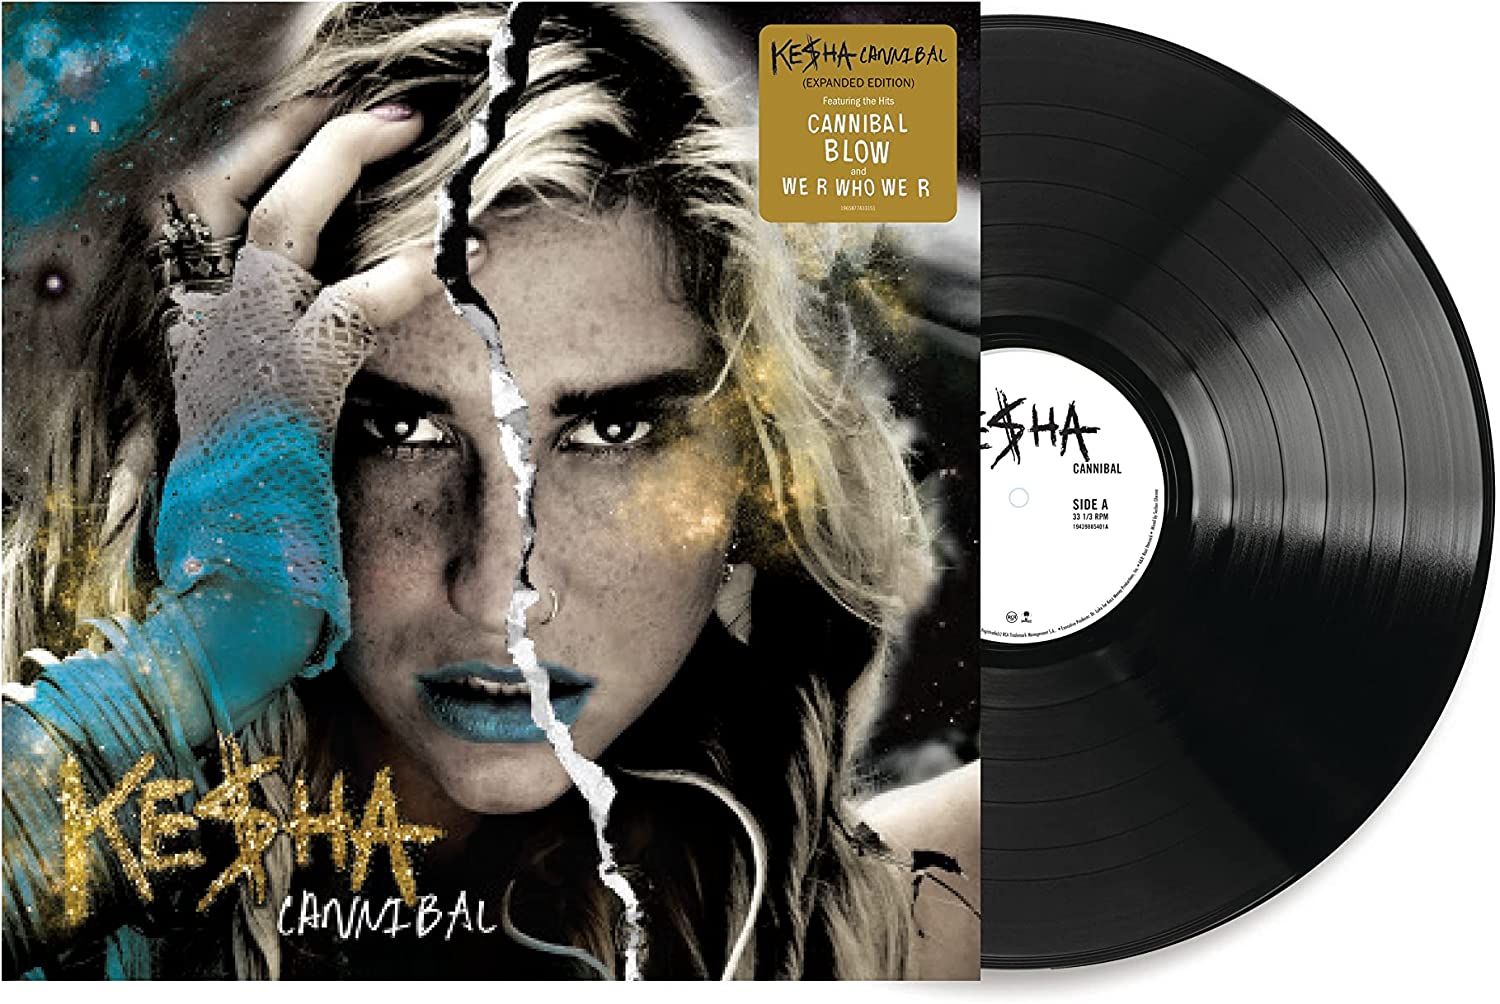 Cannibal - Vinyl (Expanded Edition) | Kesha